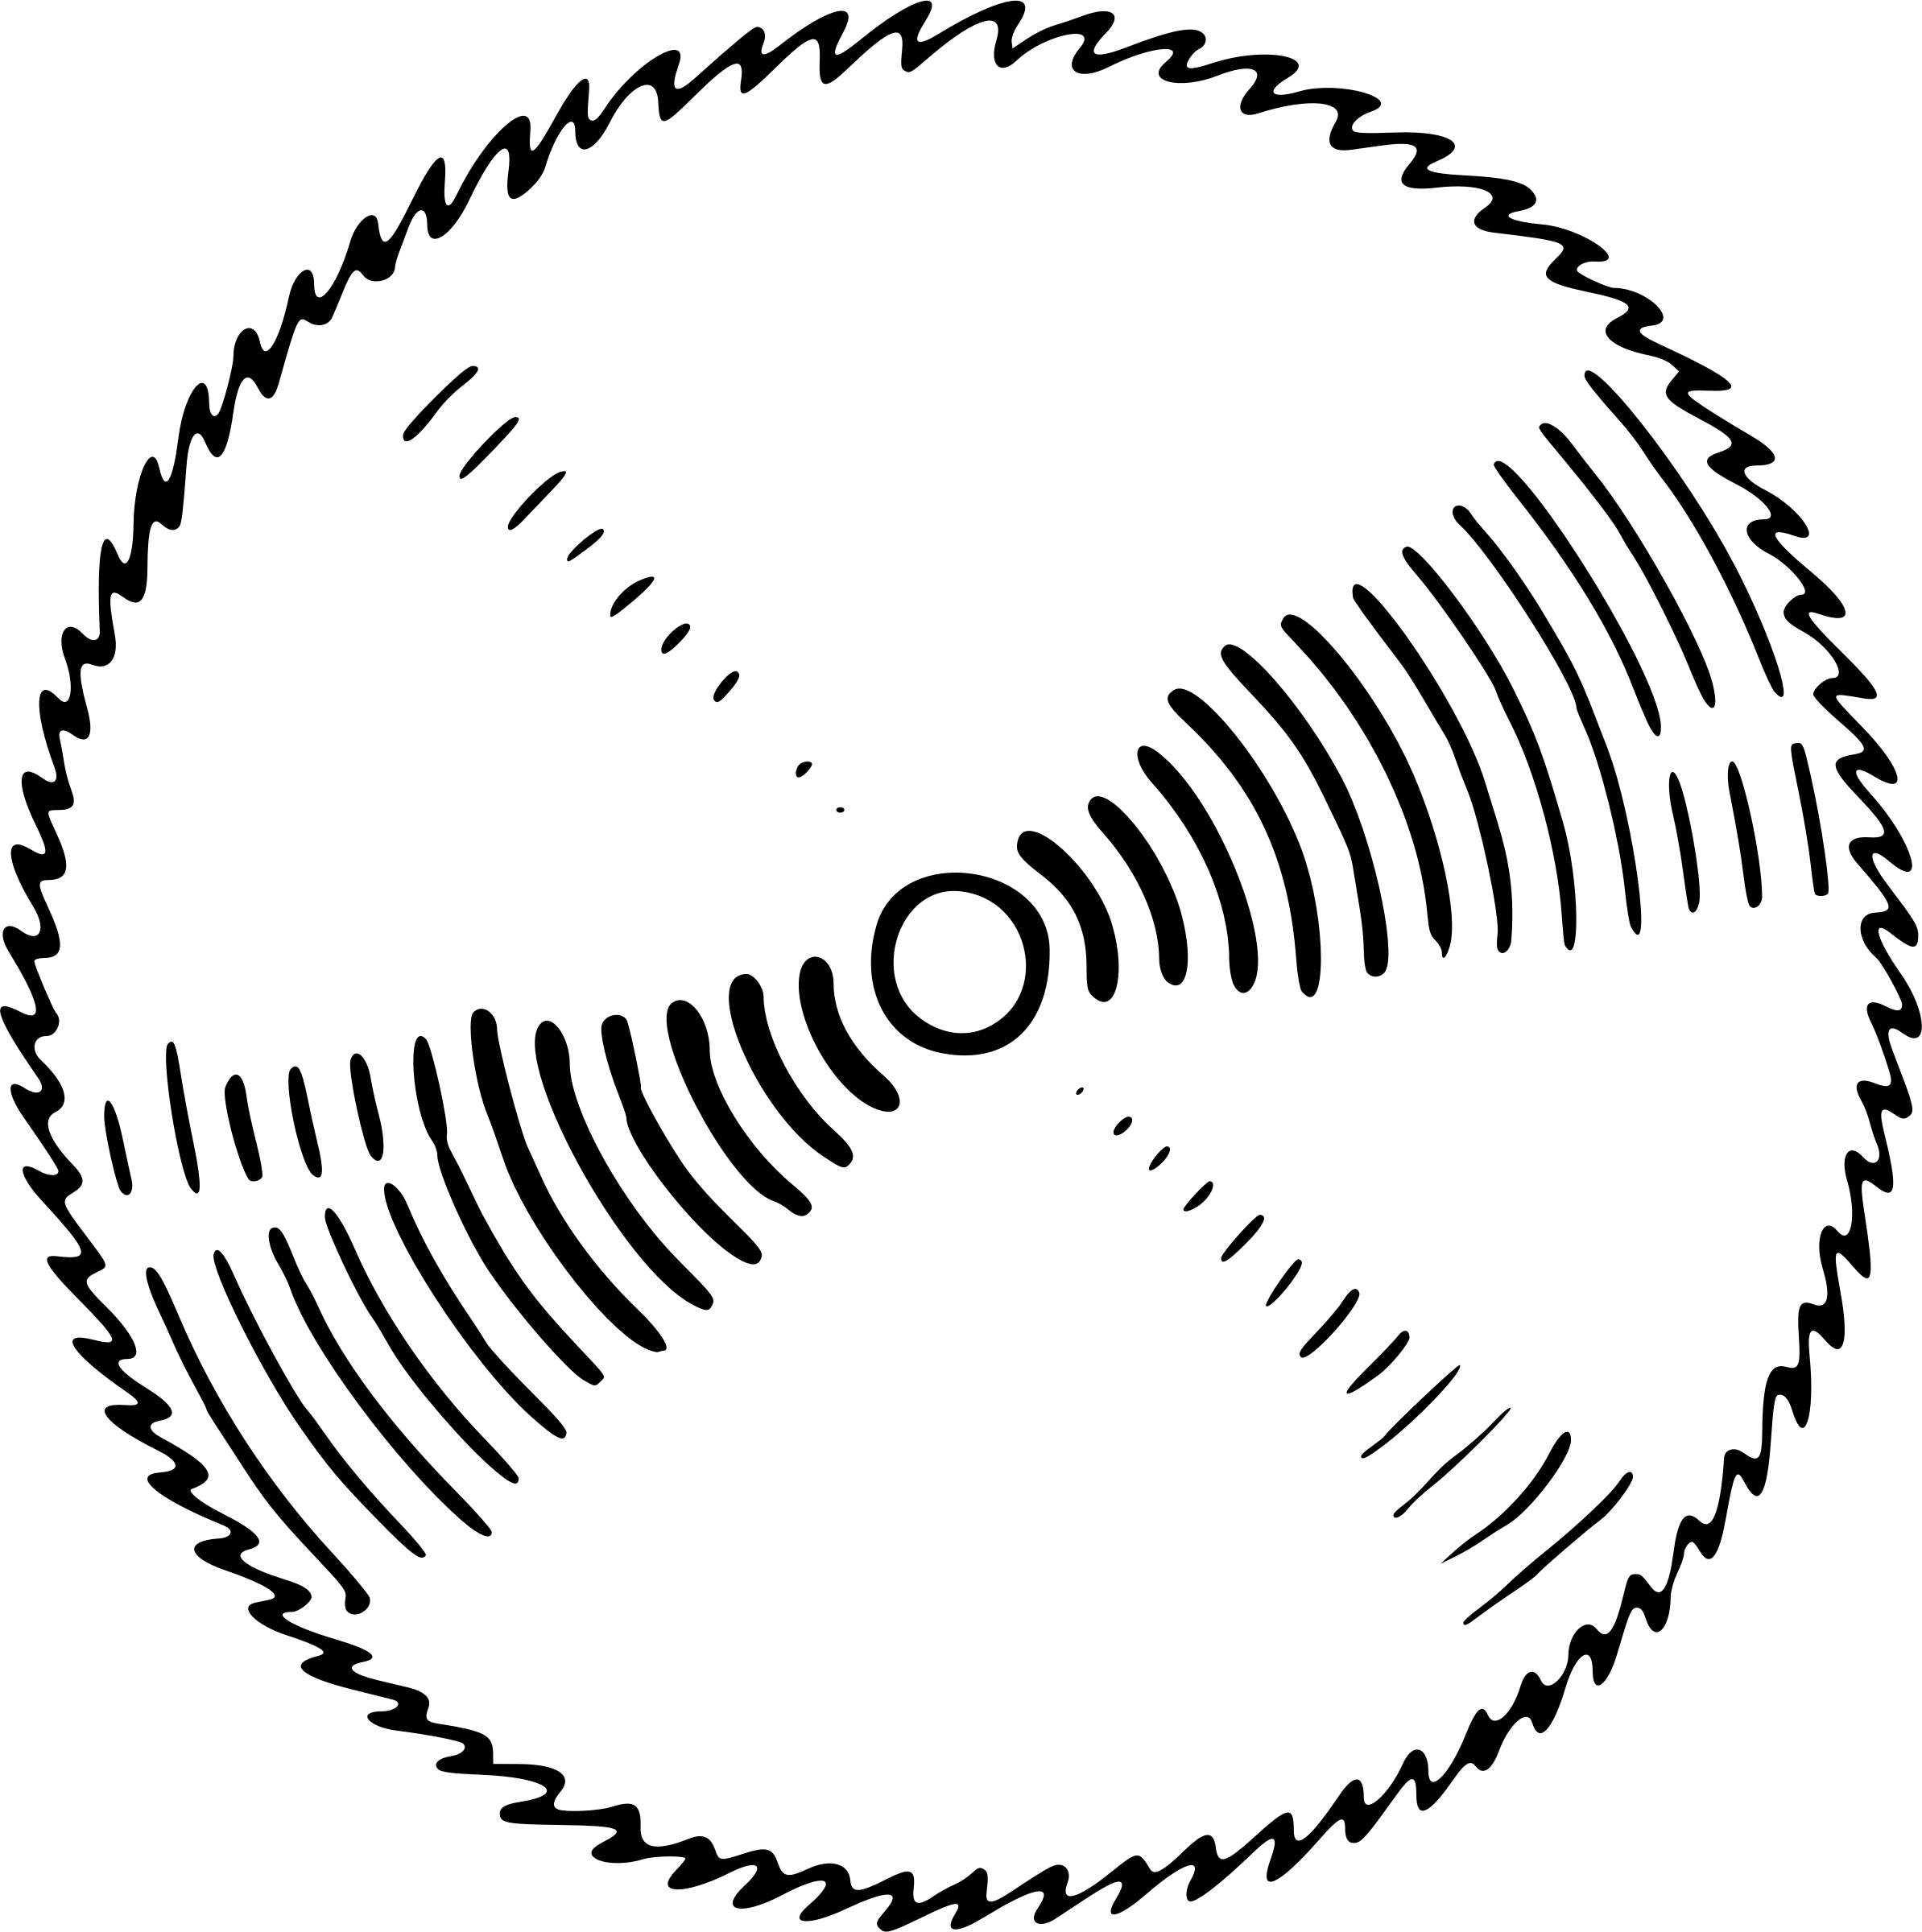 Circular Saw Graphic Vector Clipart image